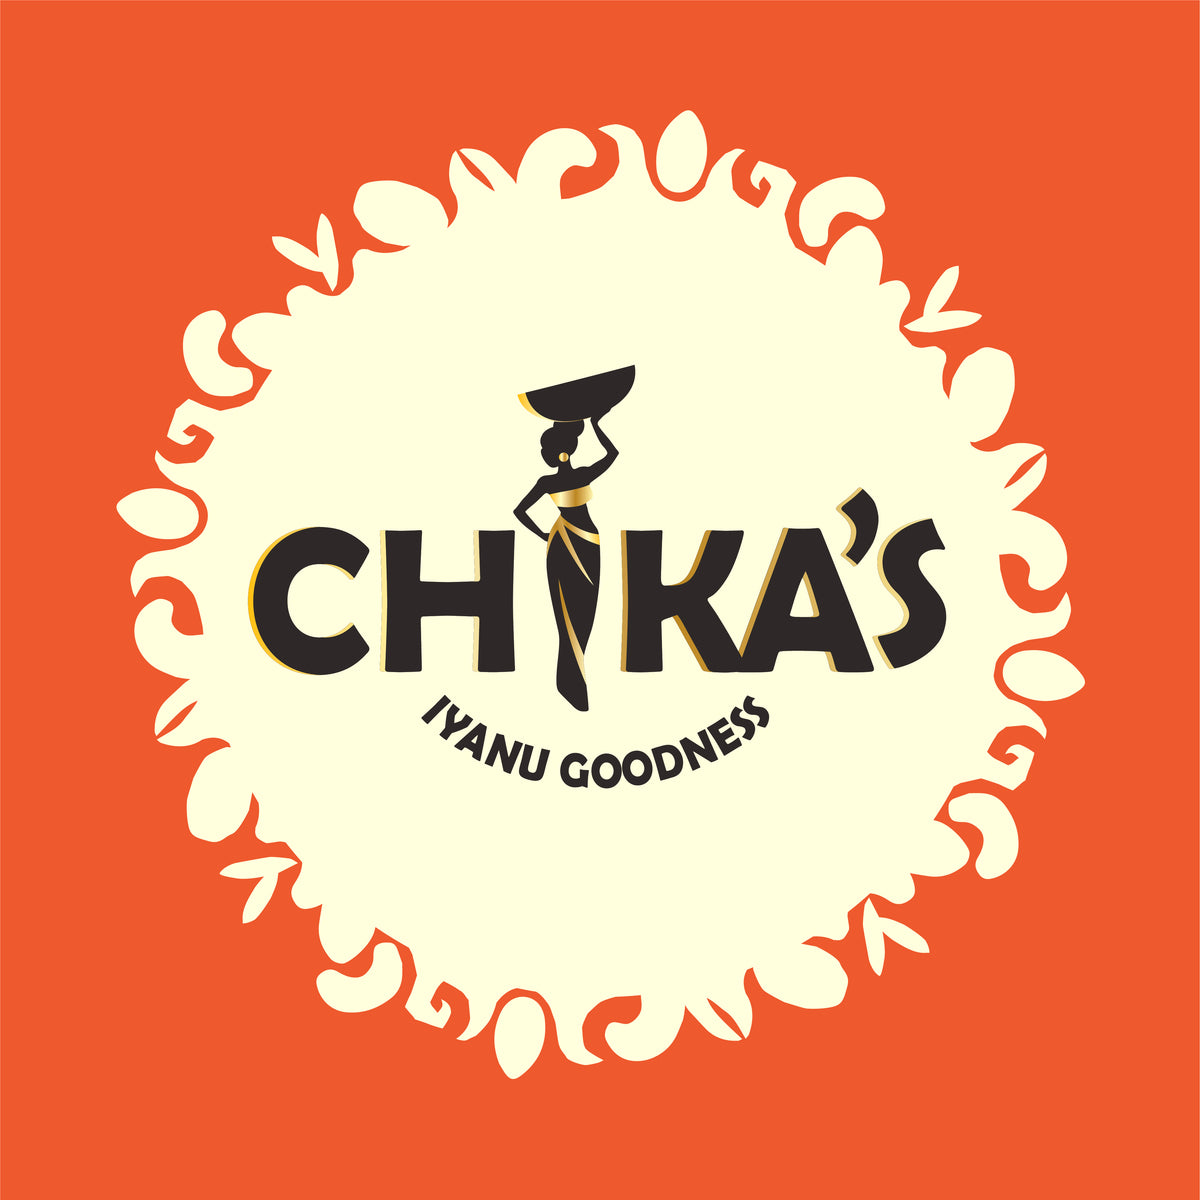 Chikas logo.